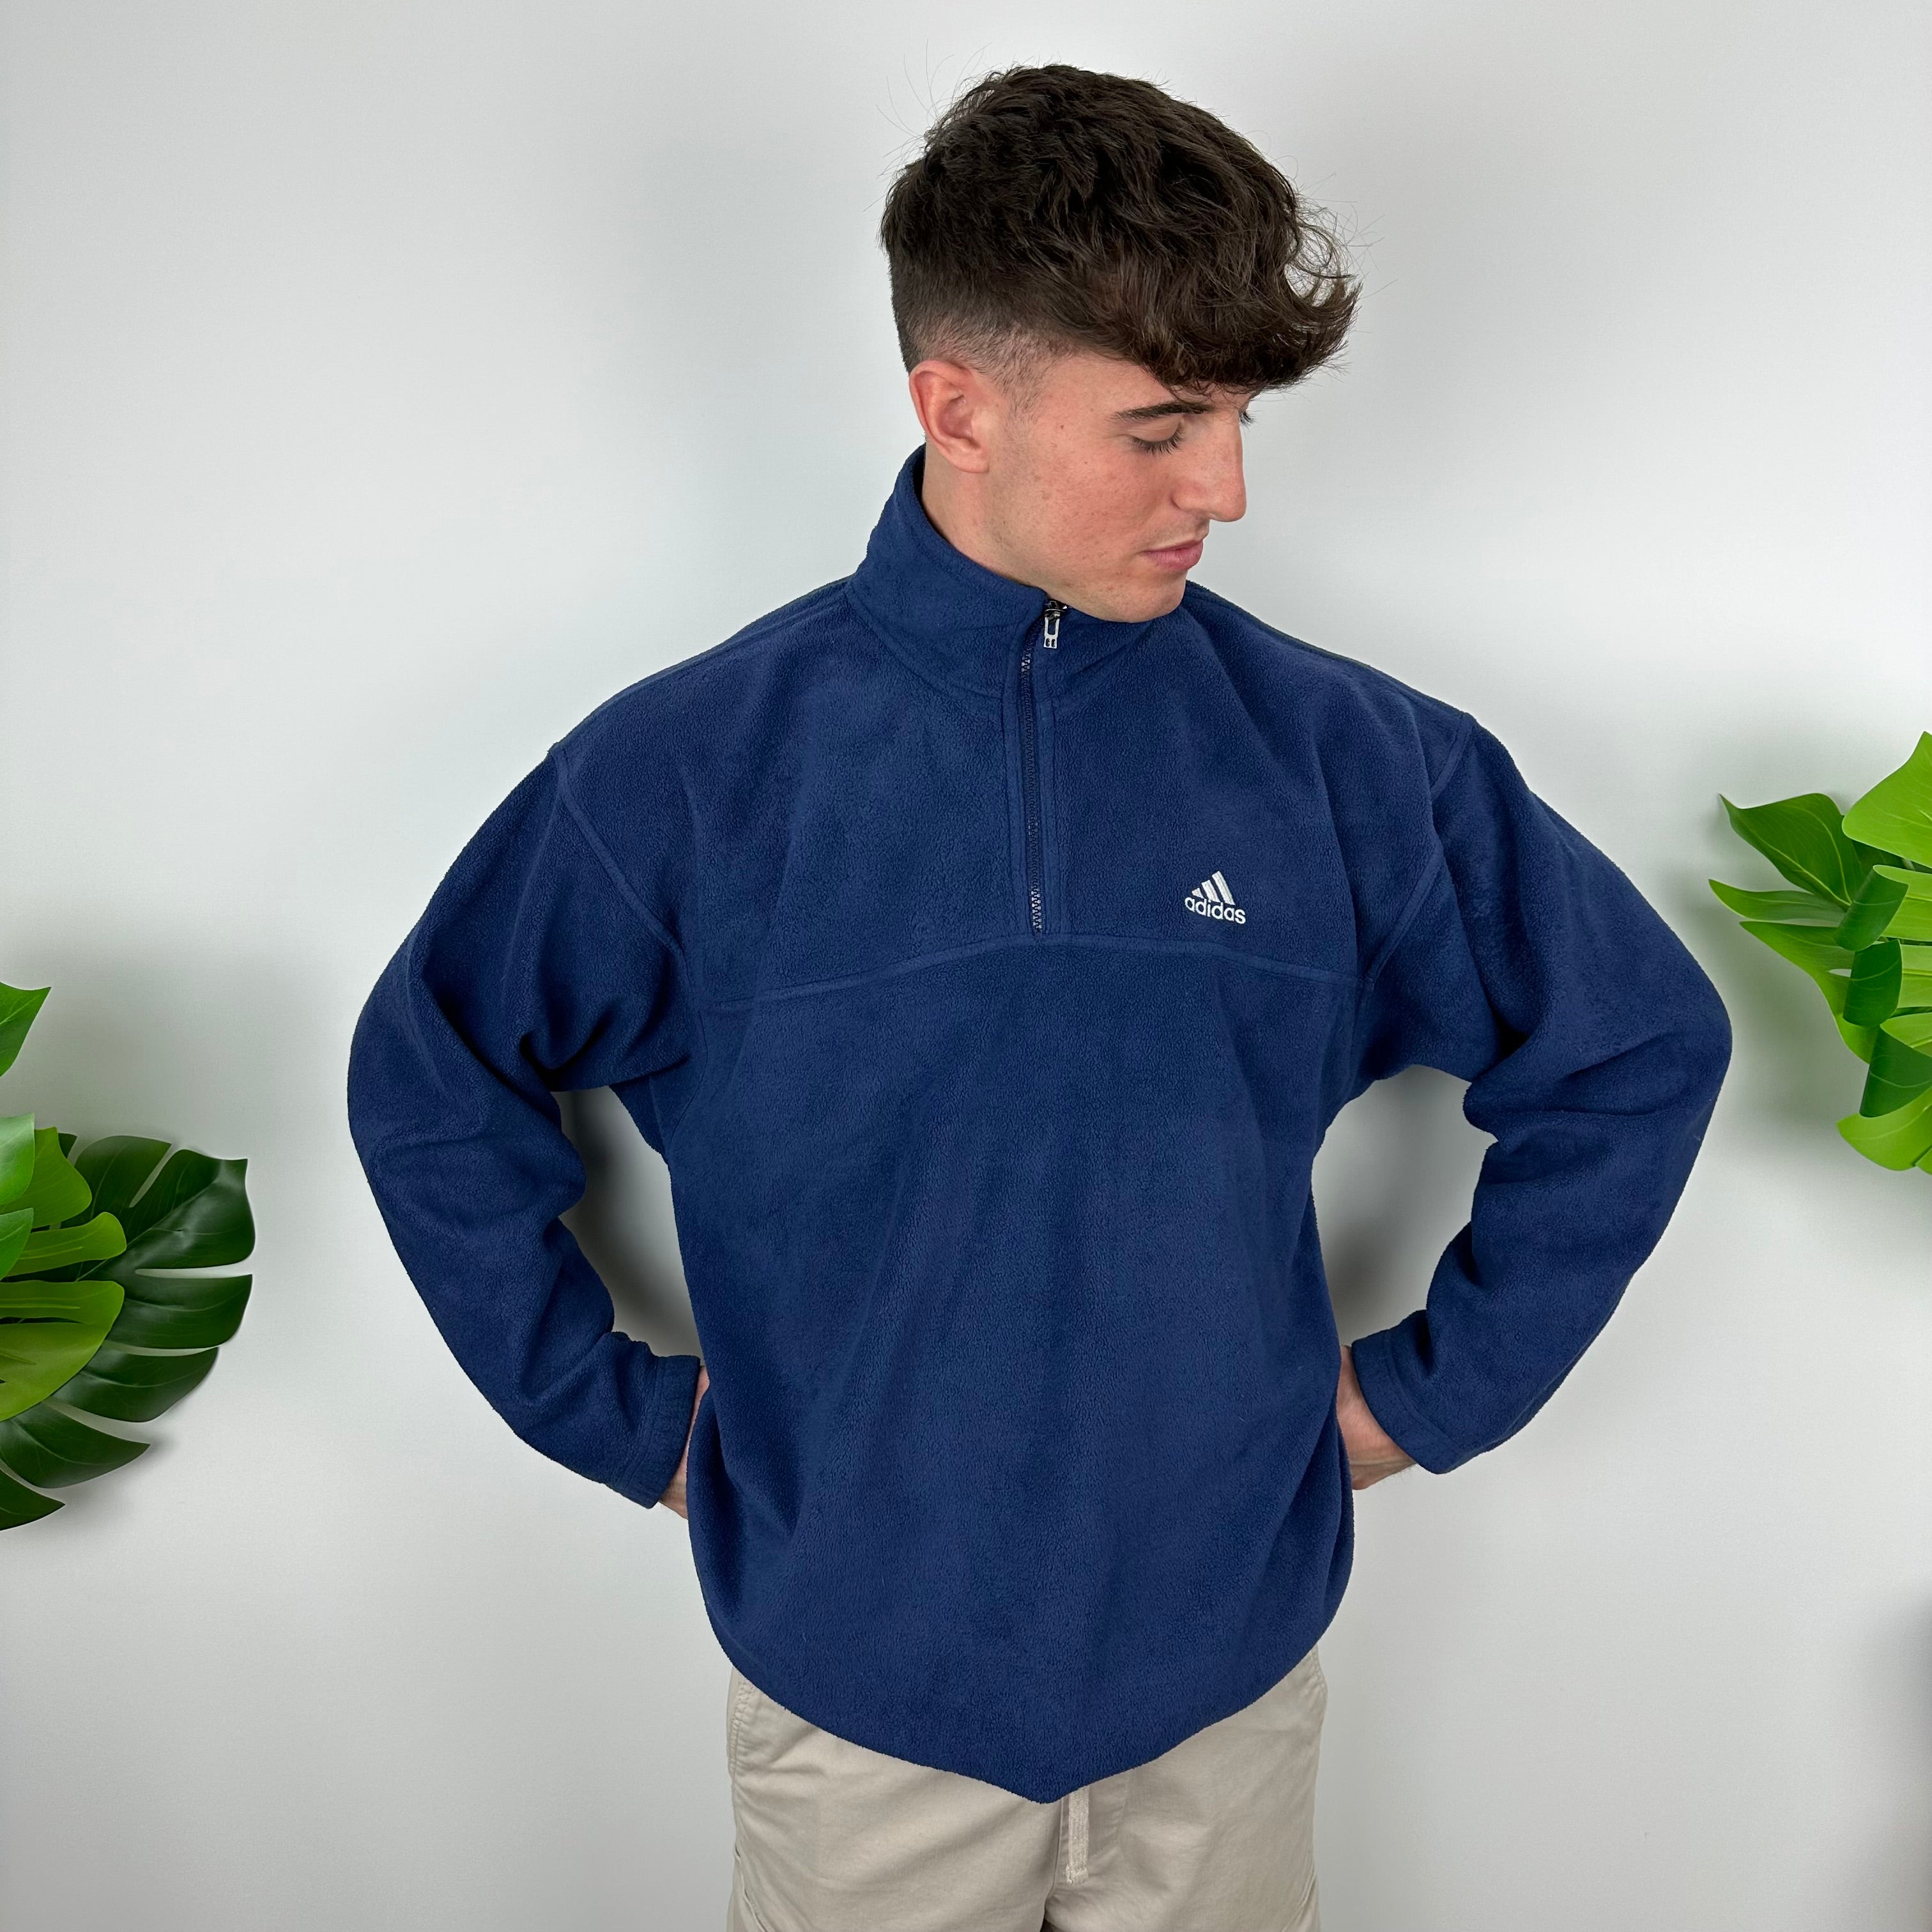 Adidas Navy Embroidered Spell Out Teddy Bear Fleece Quarter Zip Sweatshirt (L)